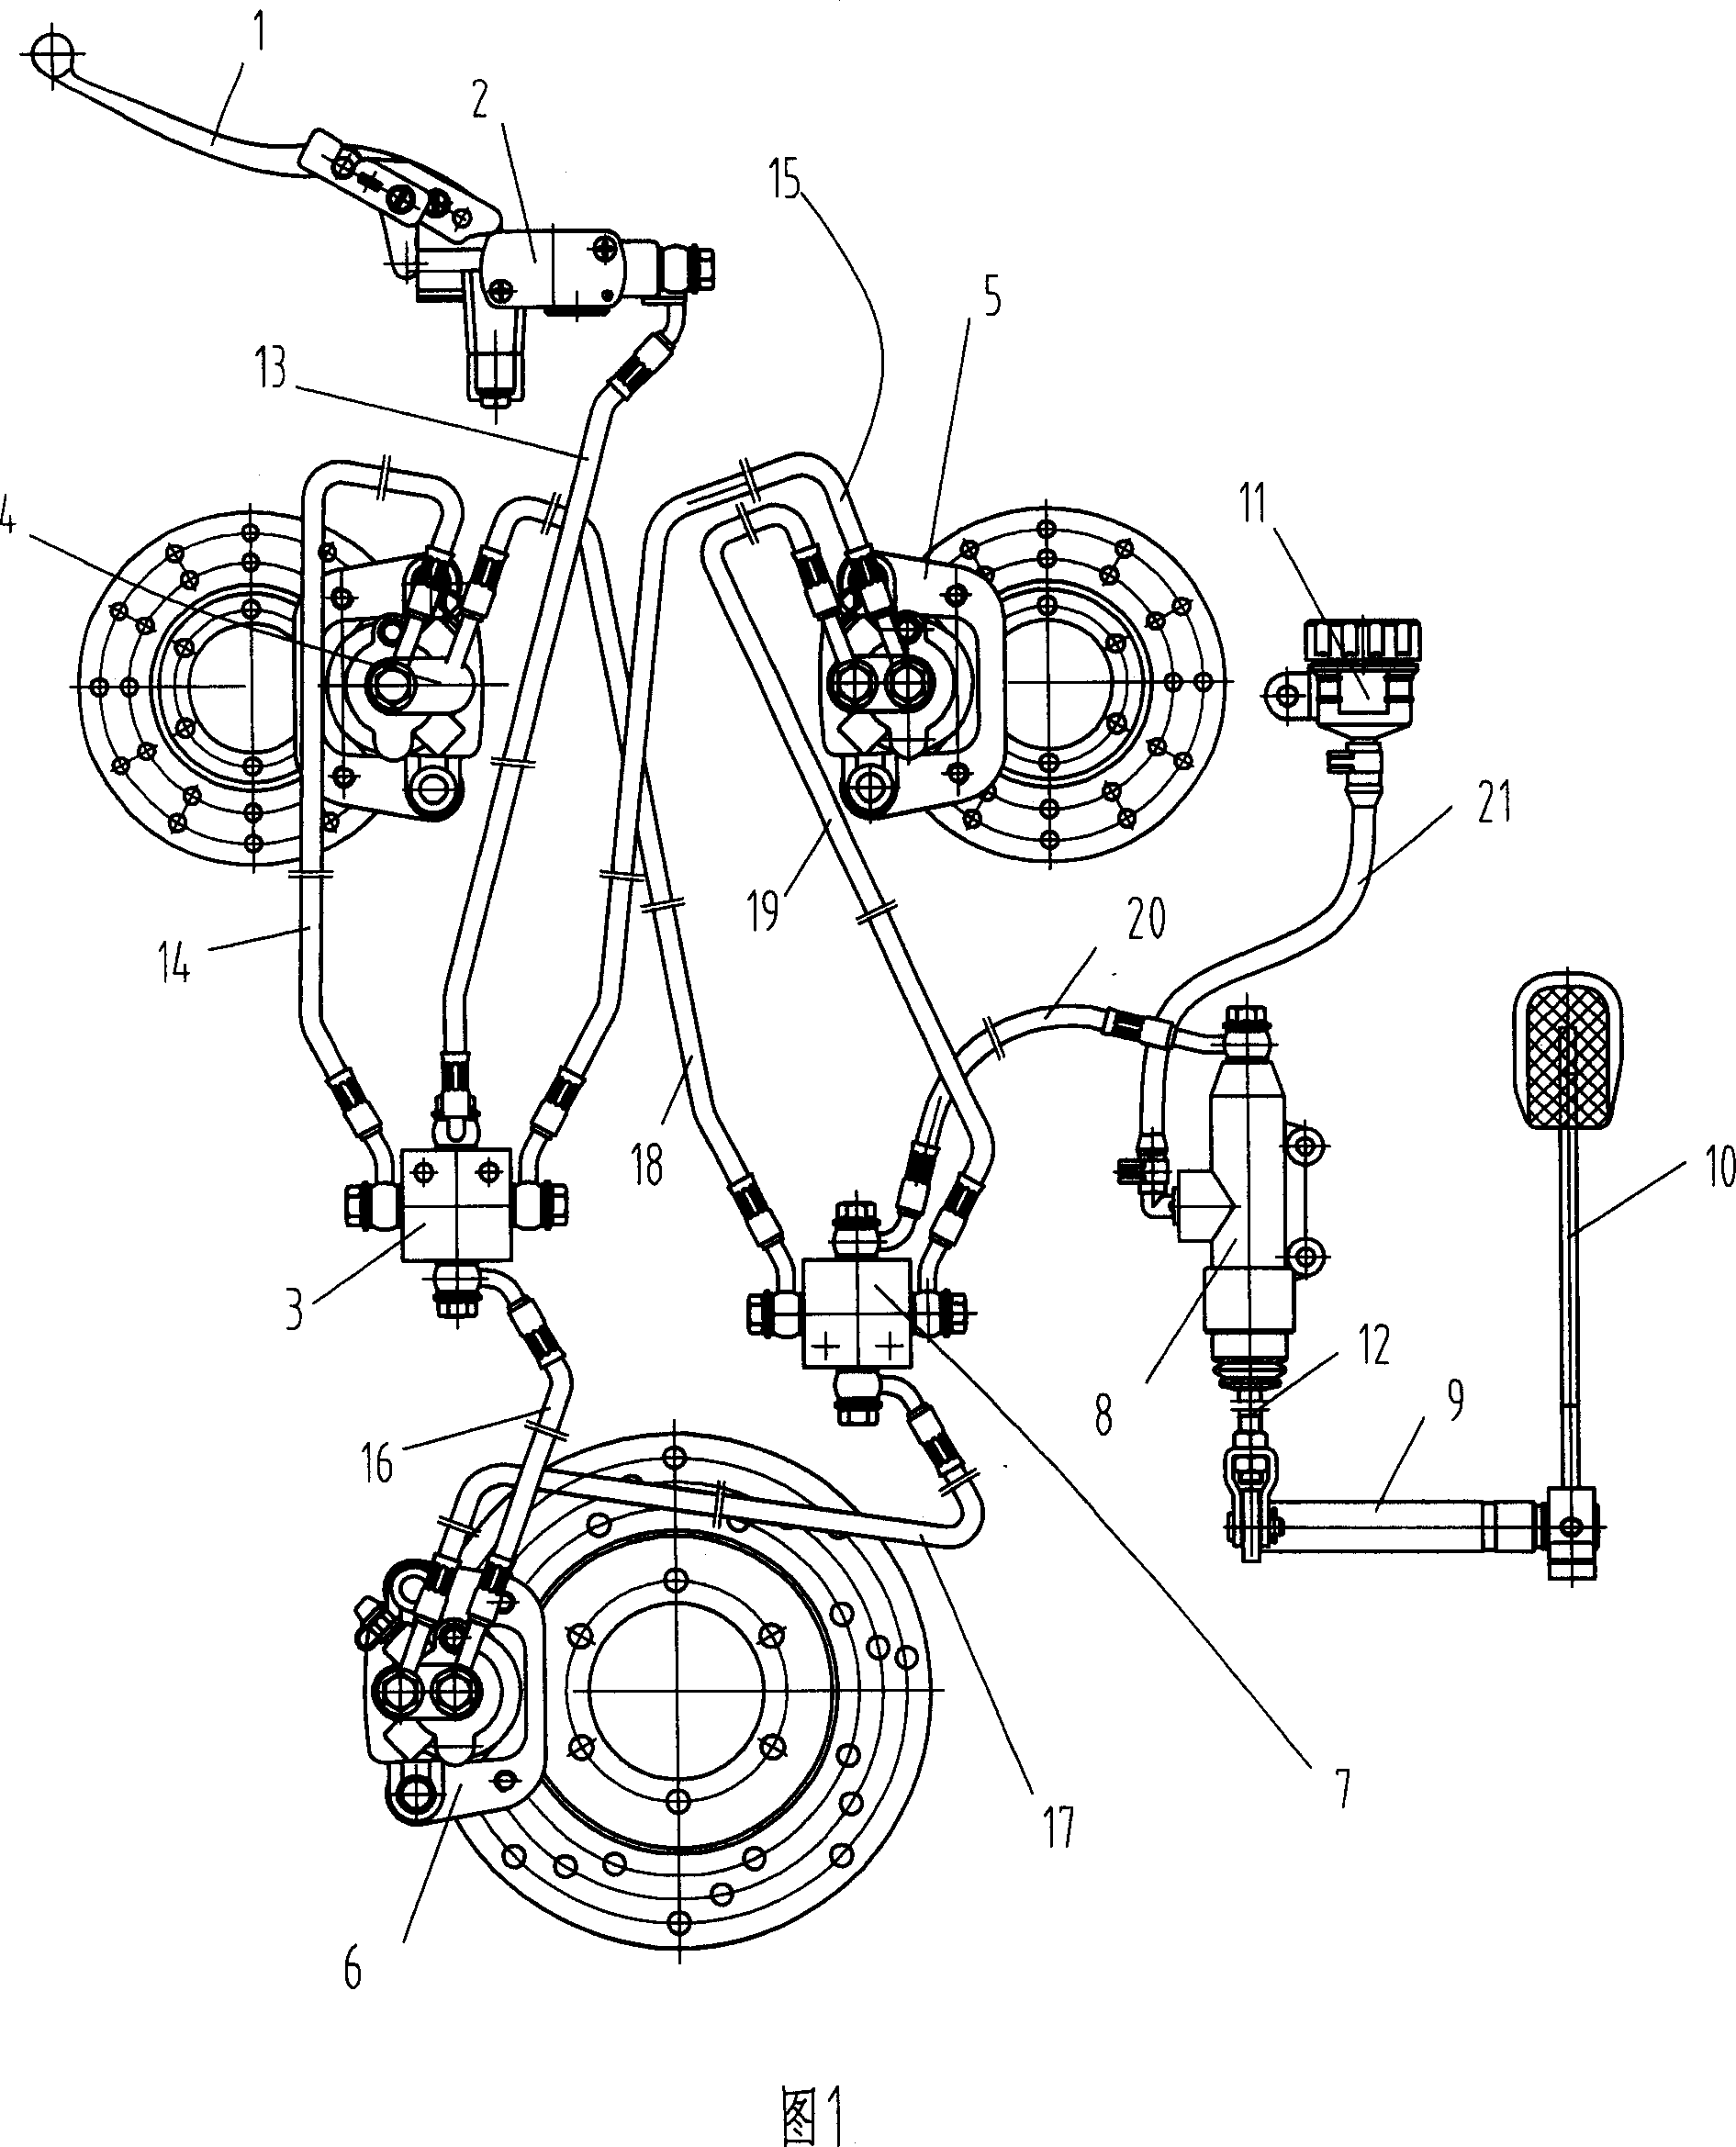 Four-wheel braking double circuit hydraulic braking arrangement